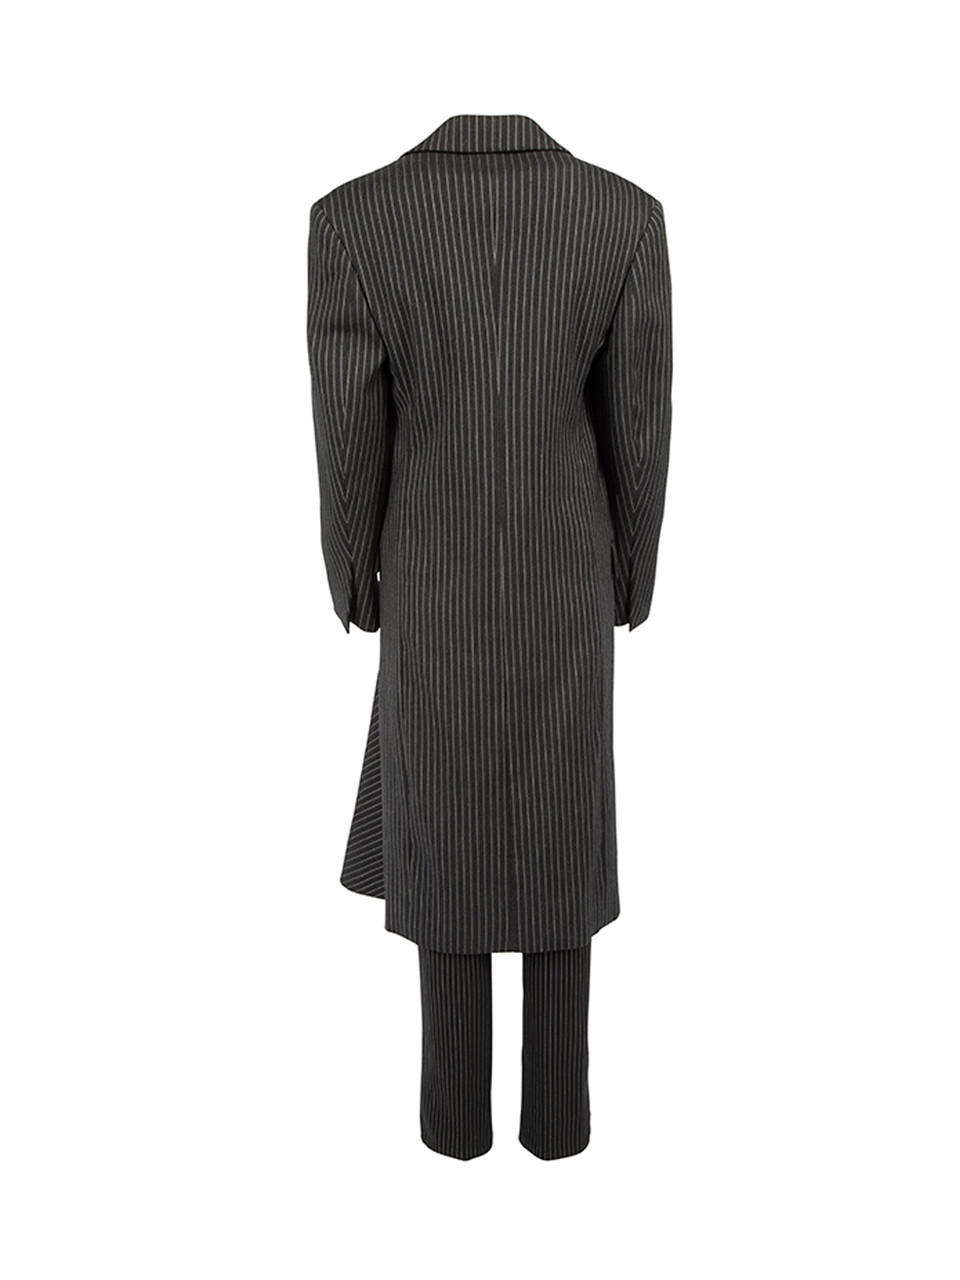 Stella McCartney Dark Grey Pinstripe Coat & Trouser Set